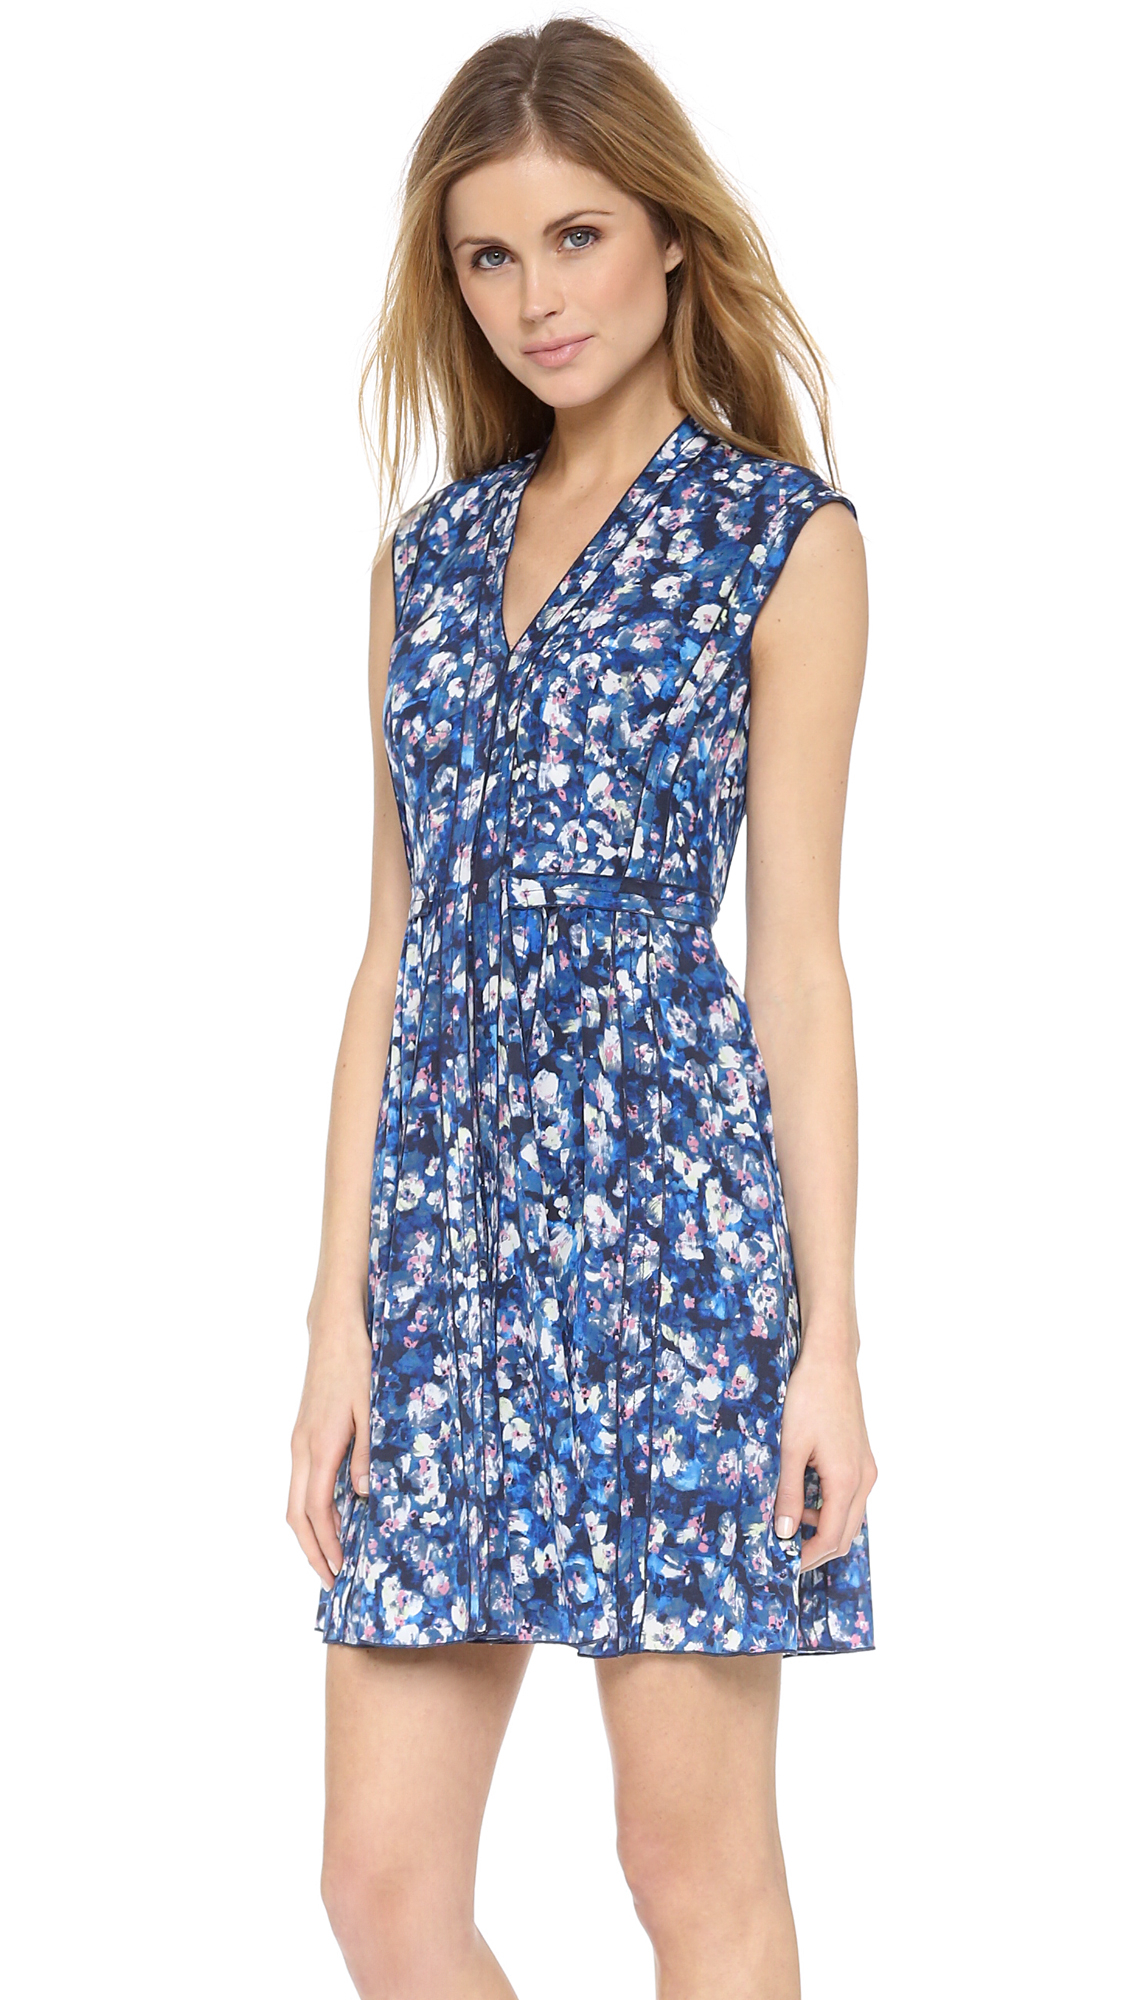 Lyst - Rebecca taylor Dream Flower Dress - Dark Combo in Blue